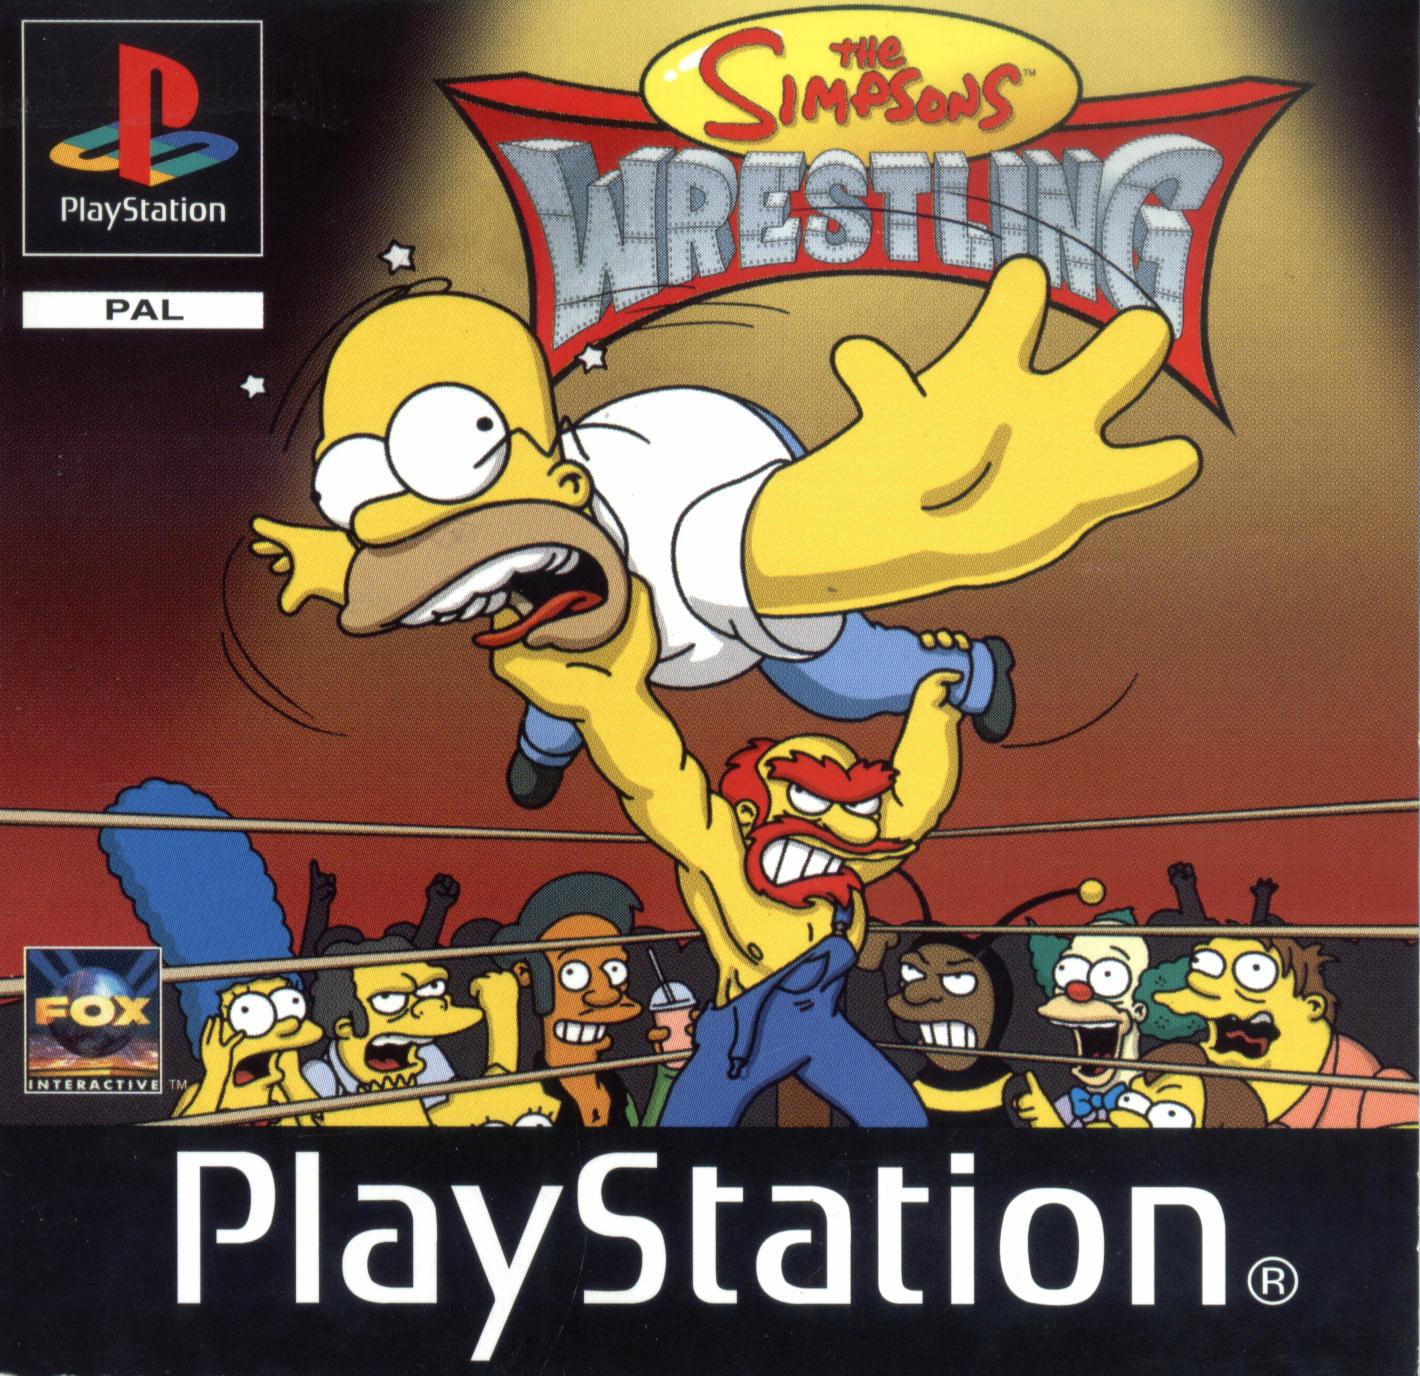 Simpsons wrestling pc game